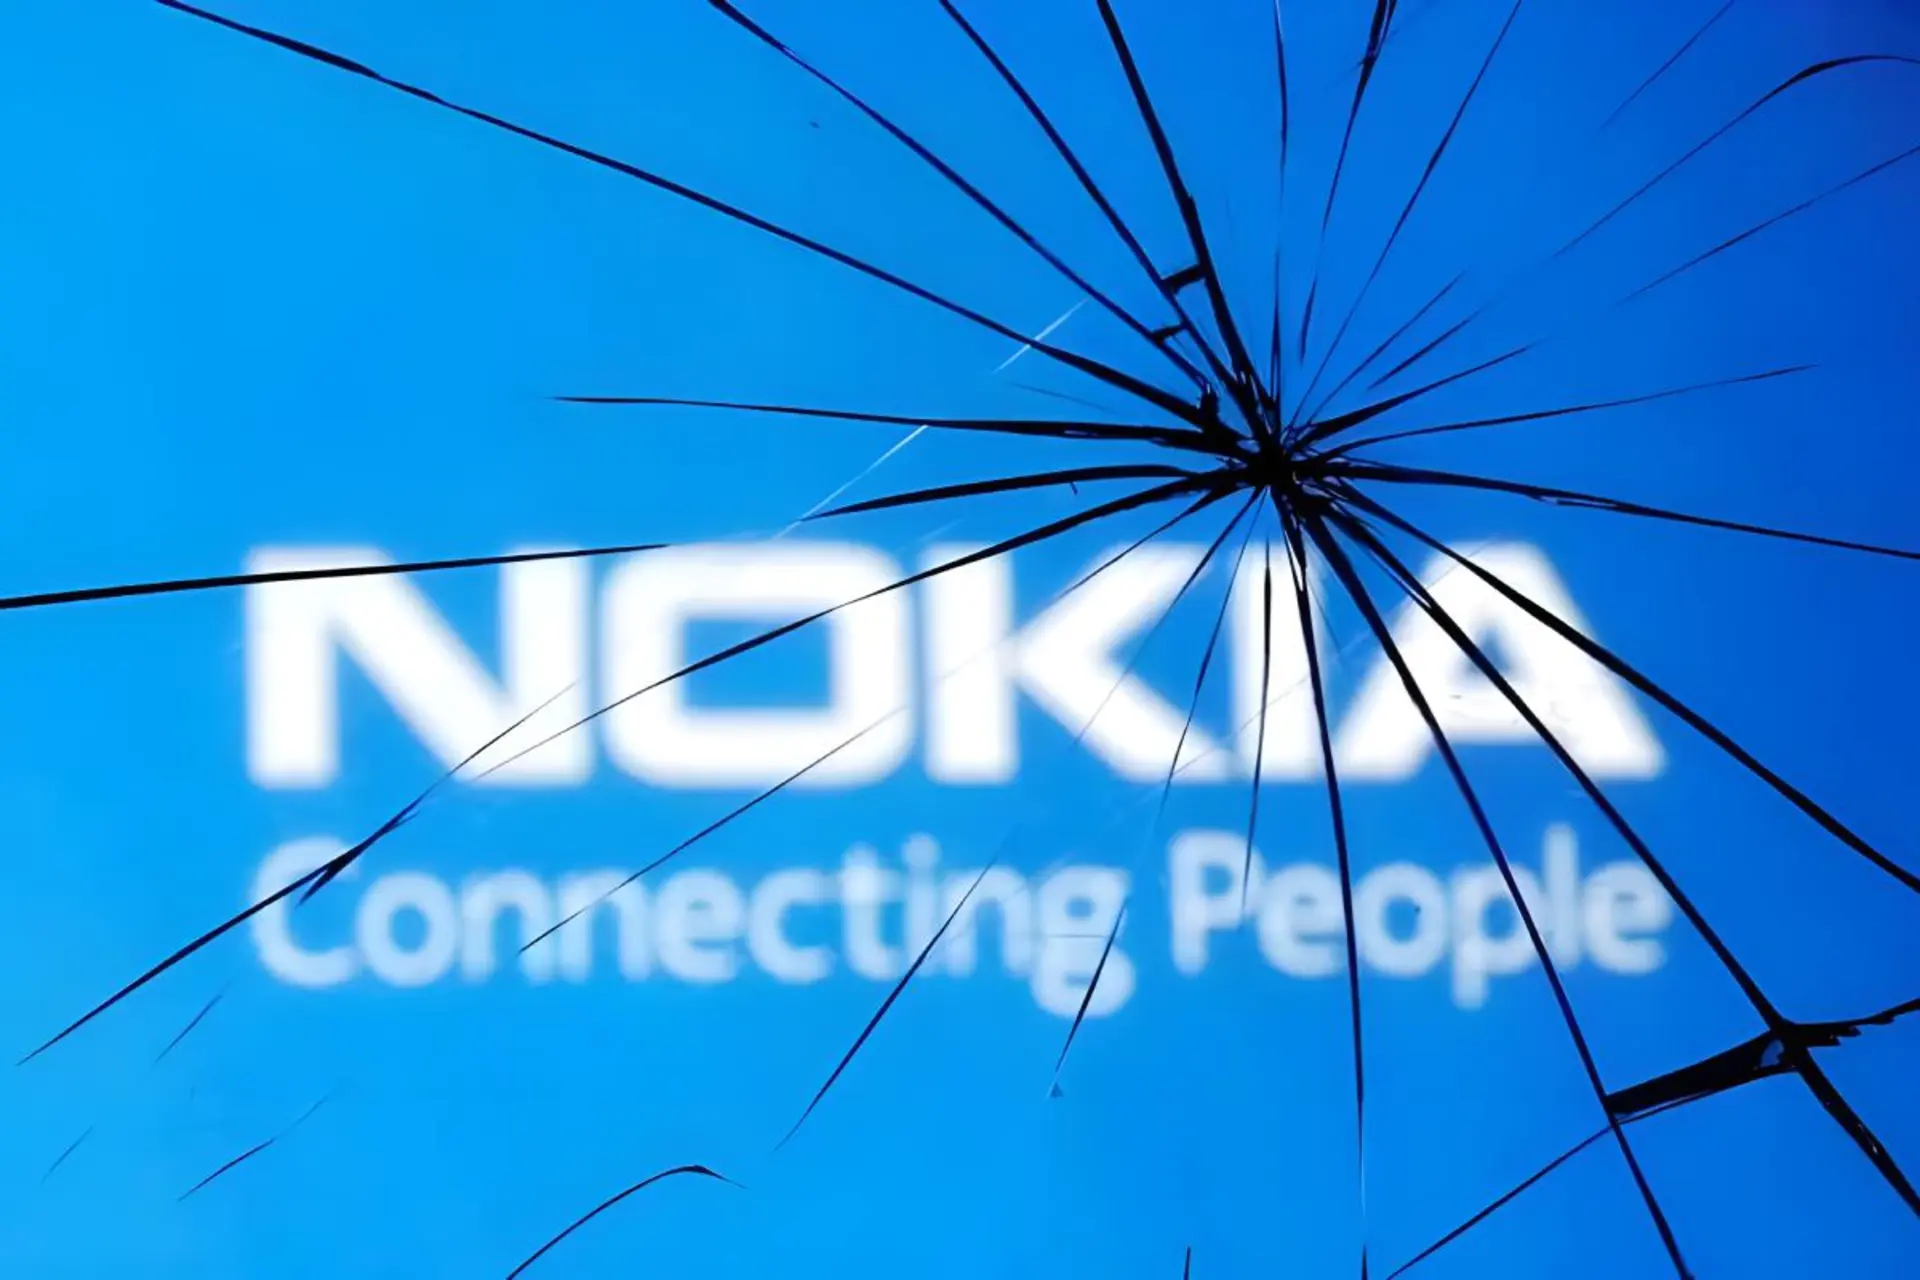 Nokia bitdi!